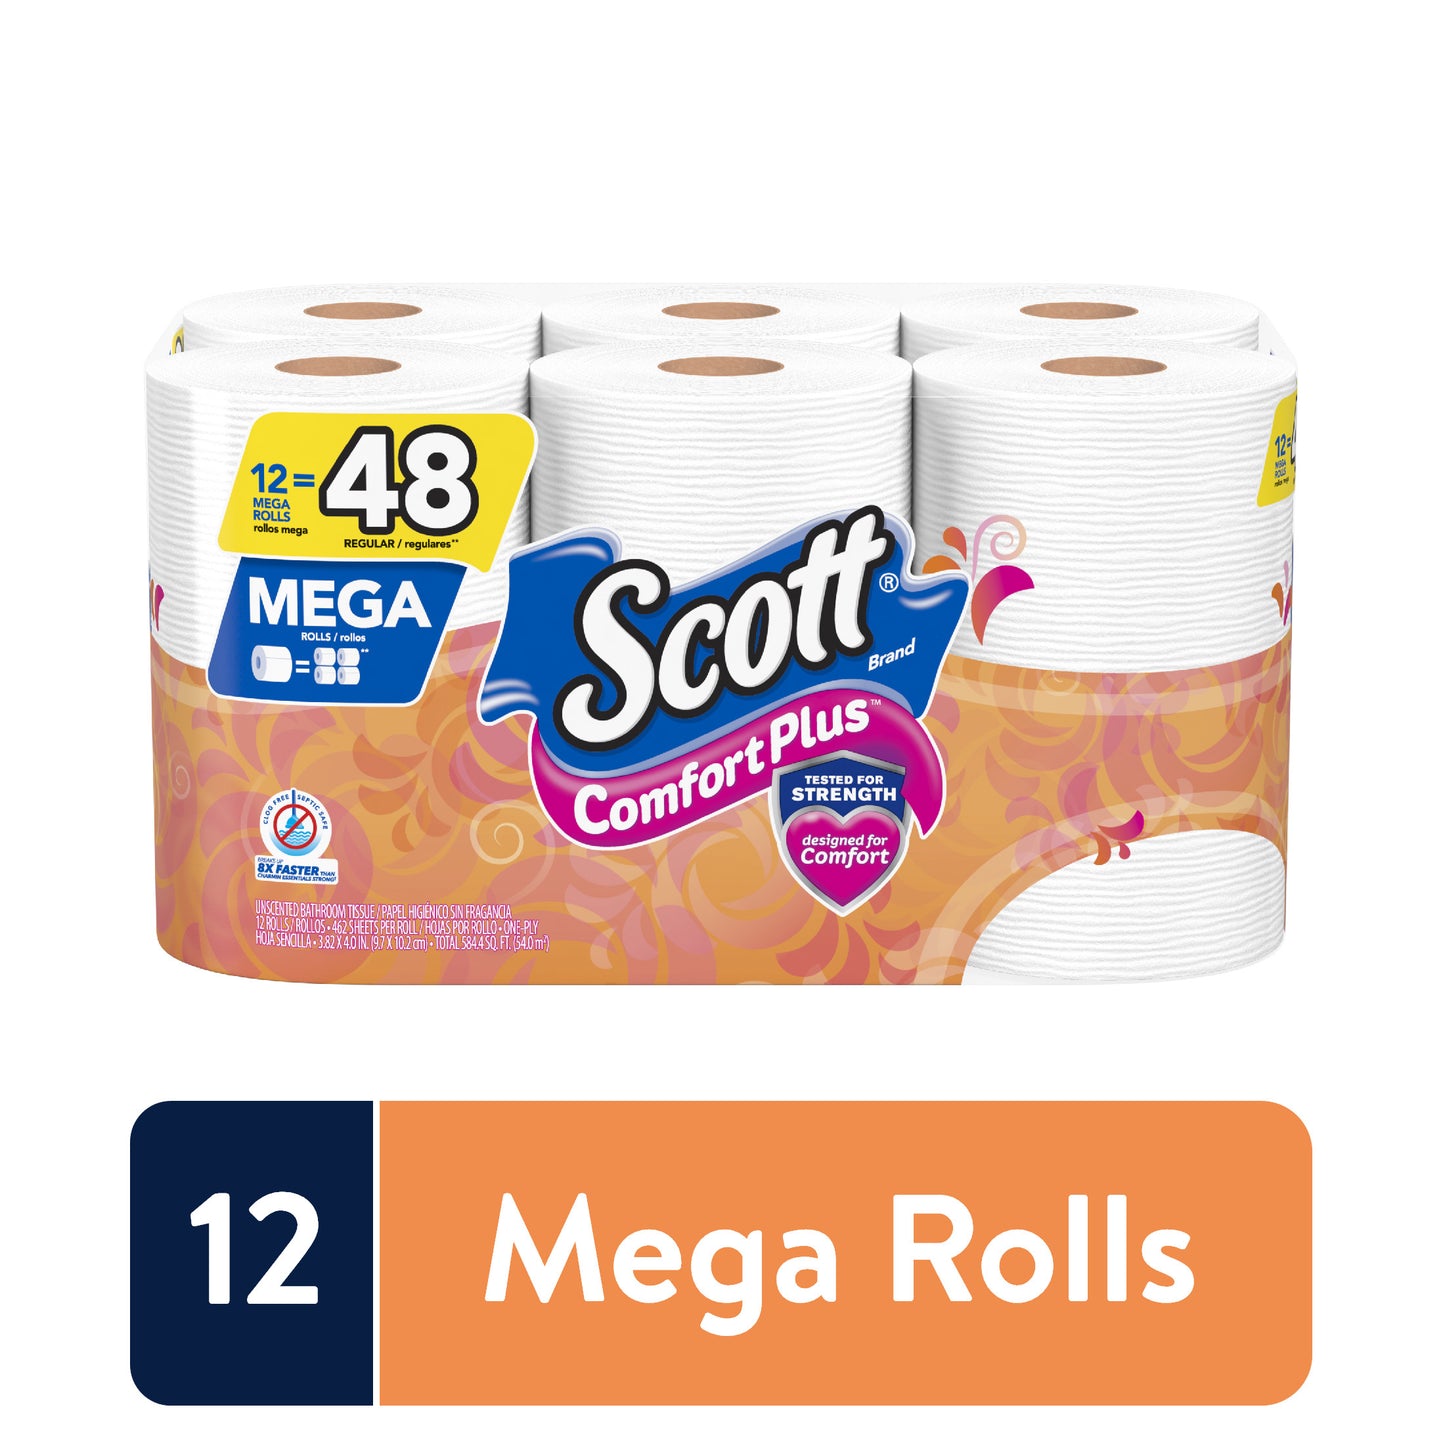 Scott Comfort Plus Toilet Paper, 12 Mega Rolls = 48 Regular